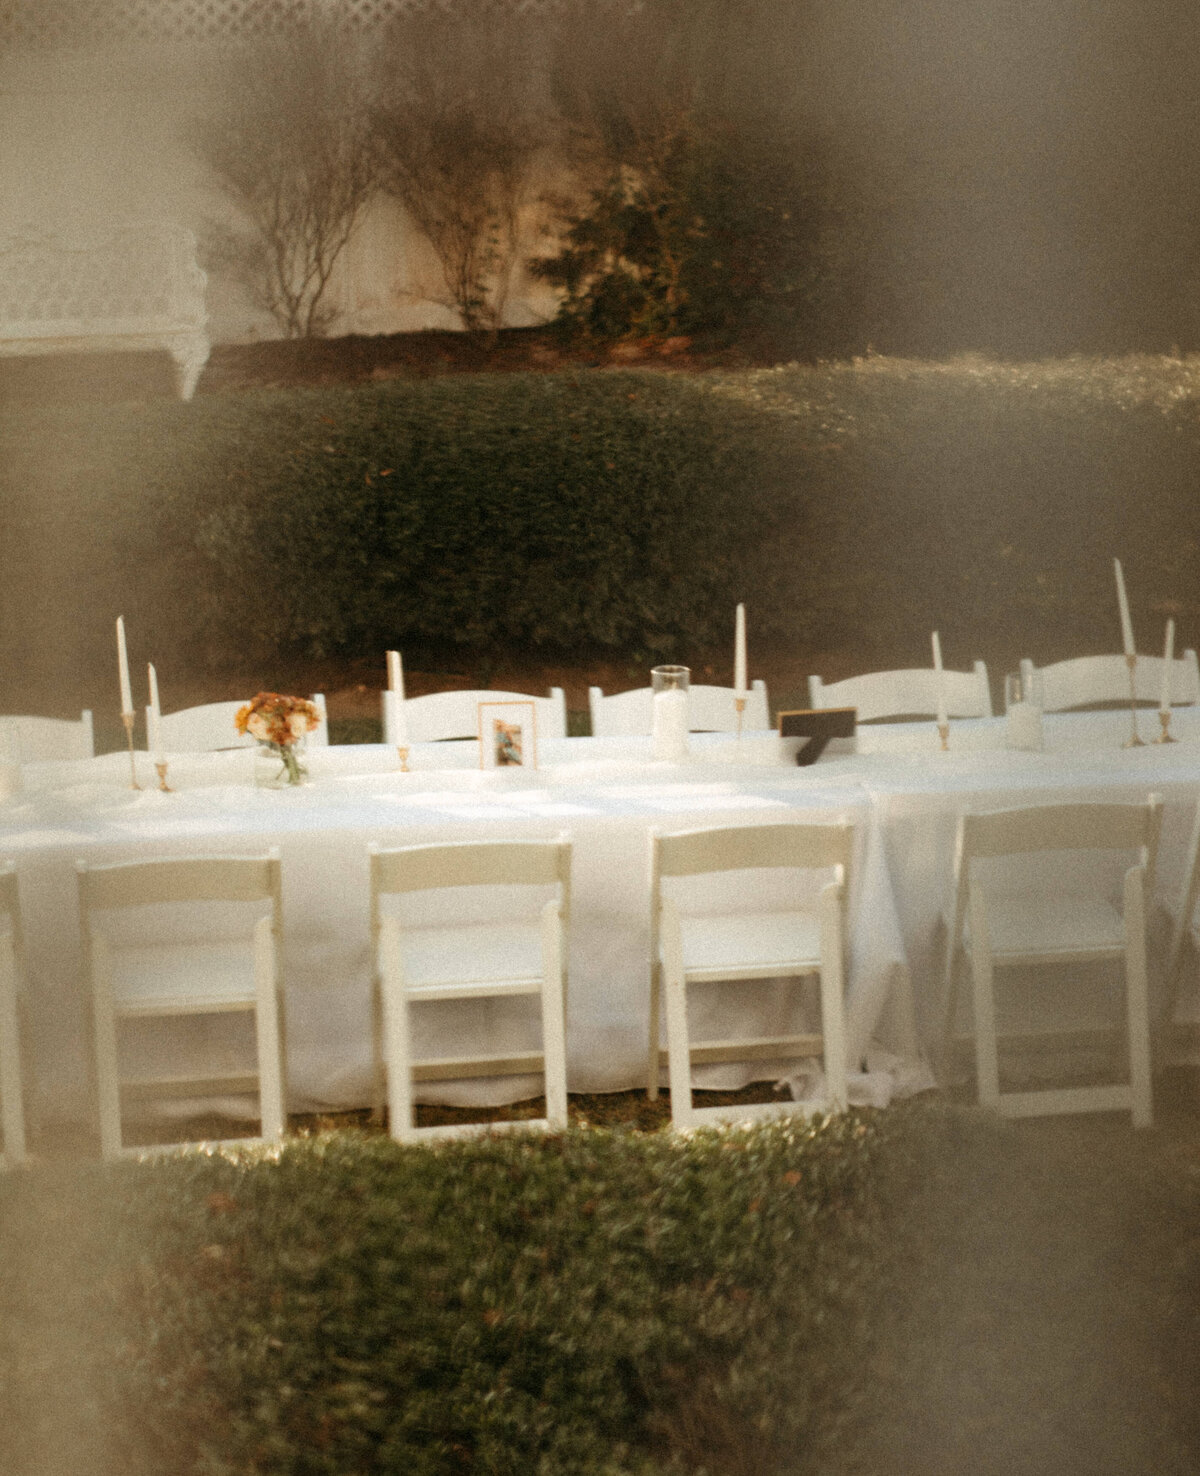 tupelo-mississippi-the-magnolias-of-aberdeen-antebellum-home-wedding-venue-reception-table-garden2